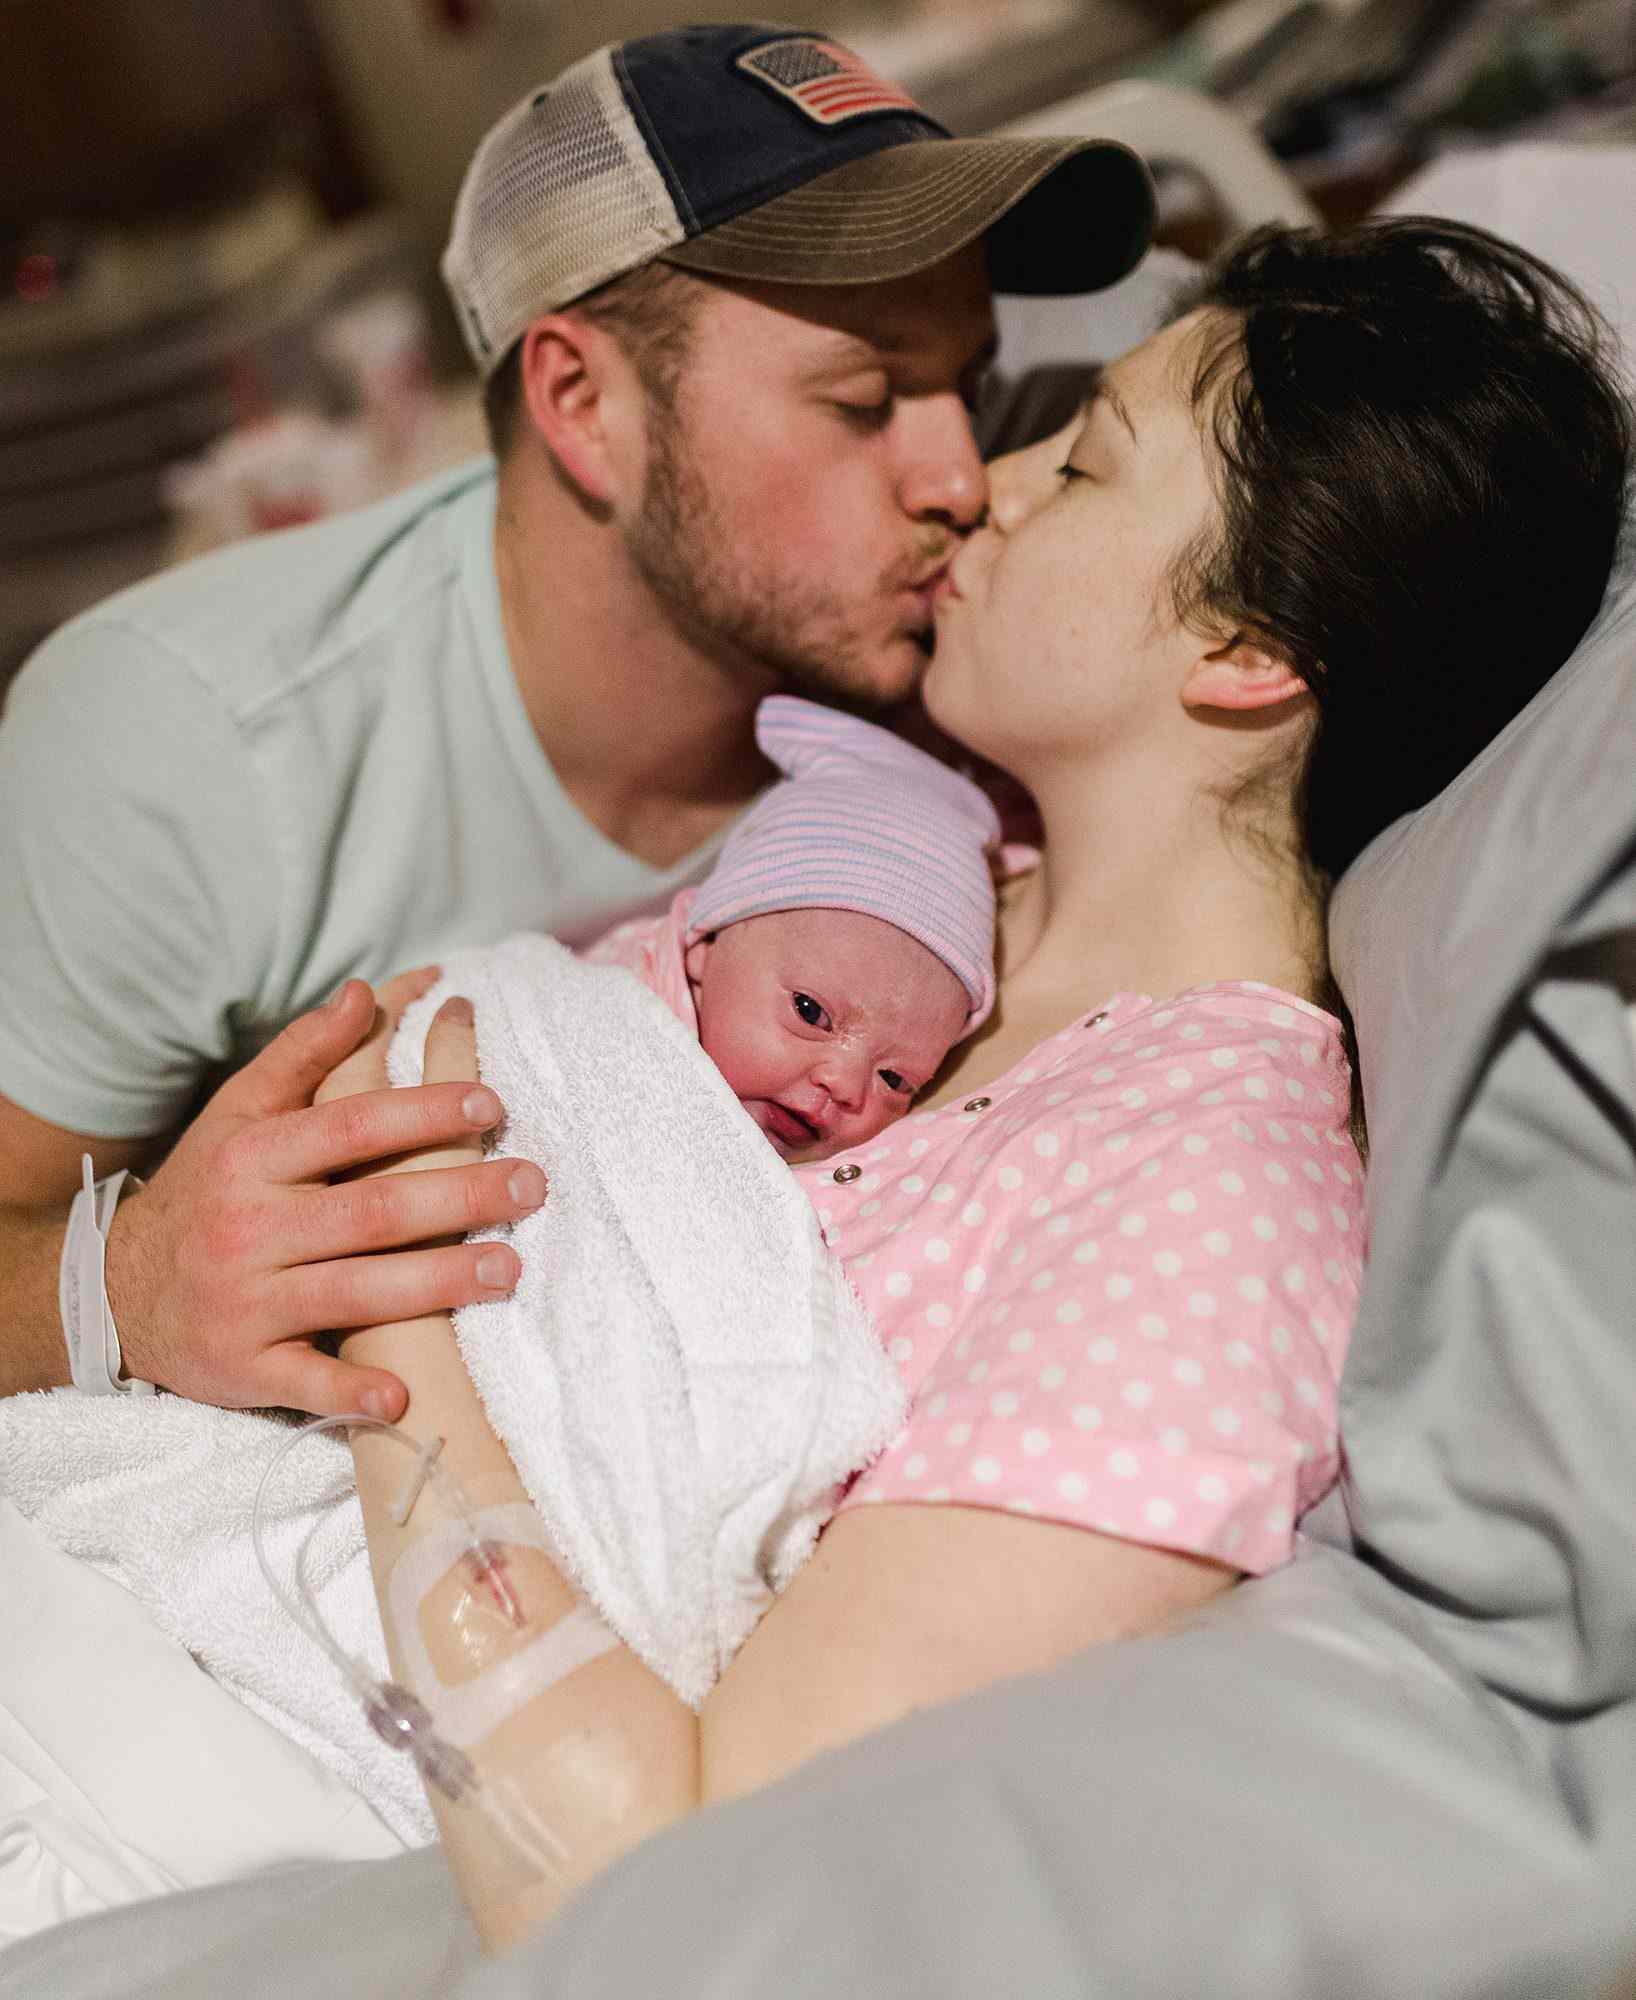 Josiah and Lauren Duggar with their baby daughter